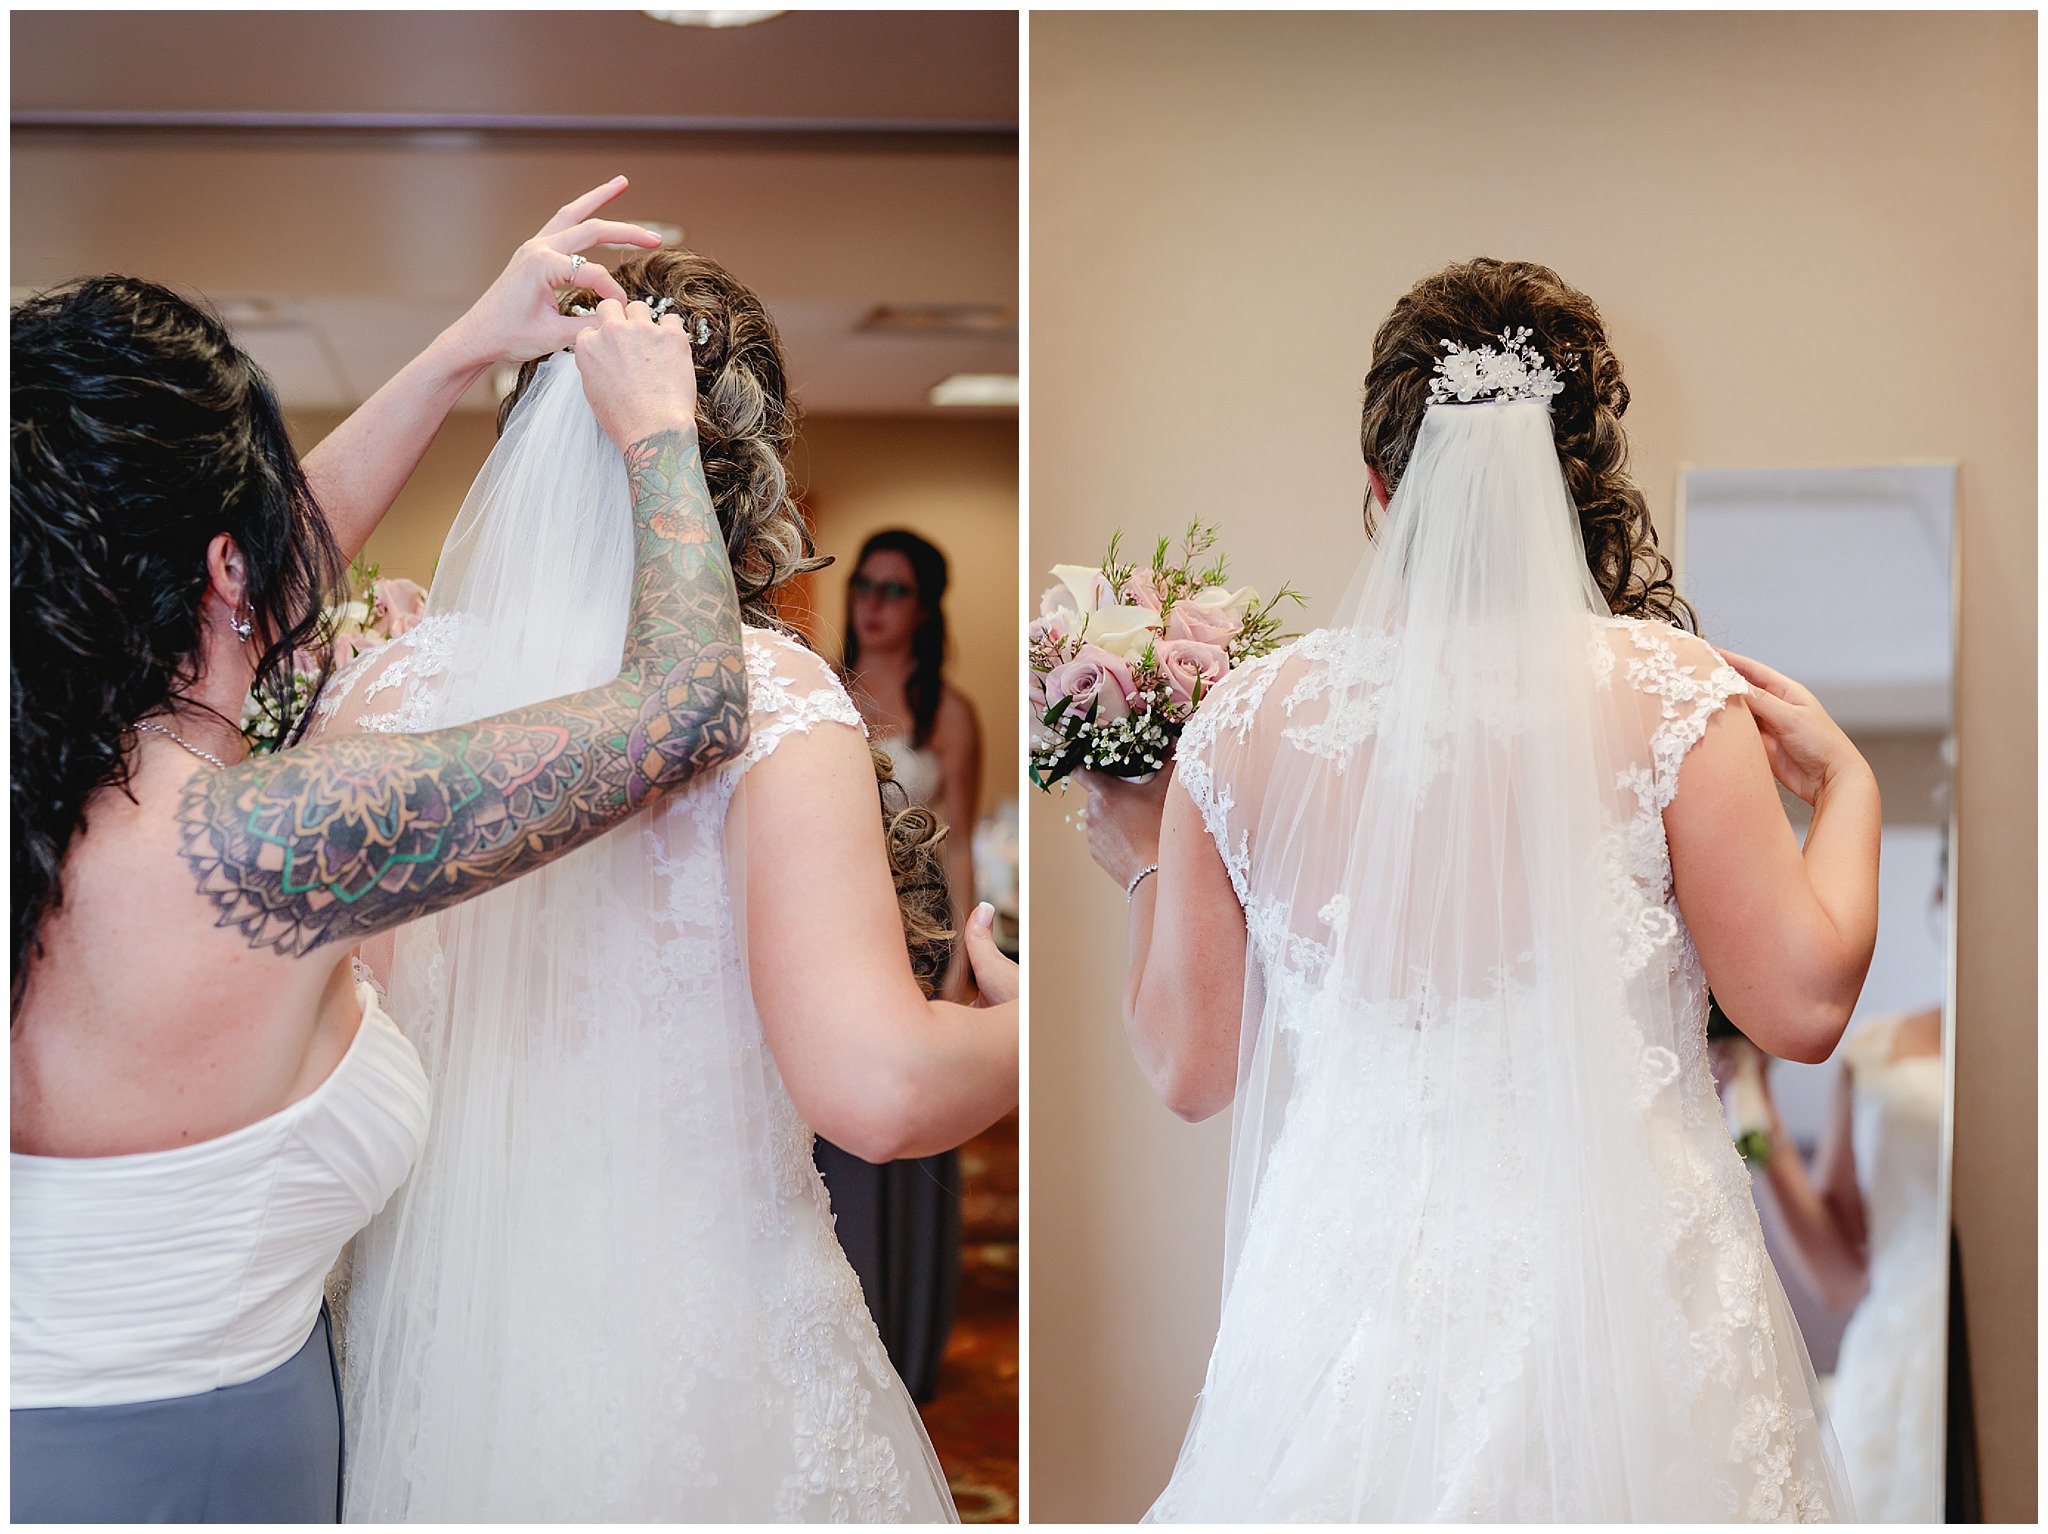 Bridesmaid helps put veil into bride's hair at Chestnut Ridge Golf Resort